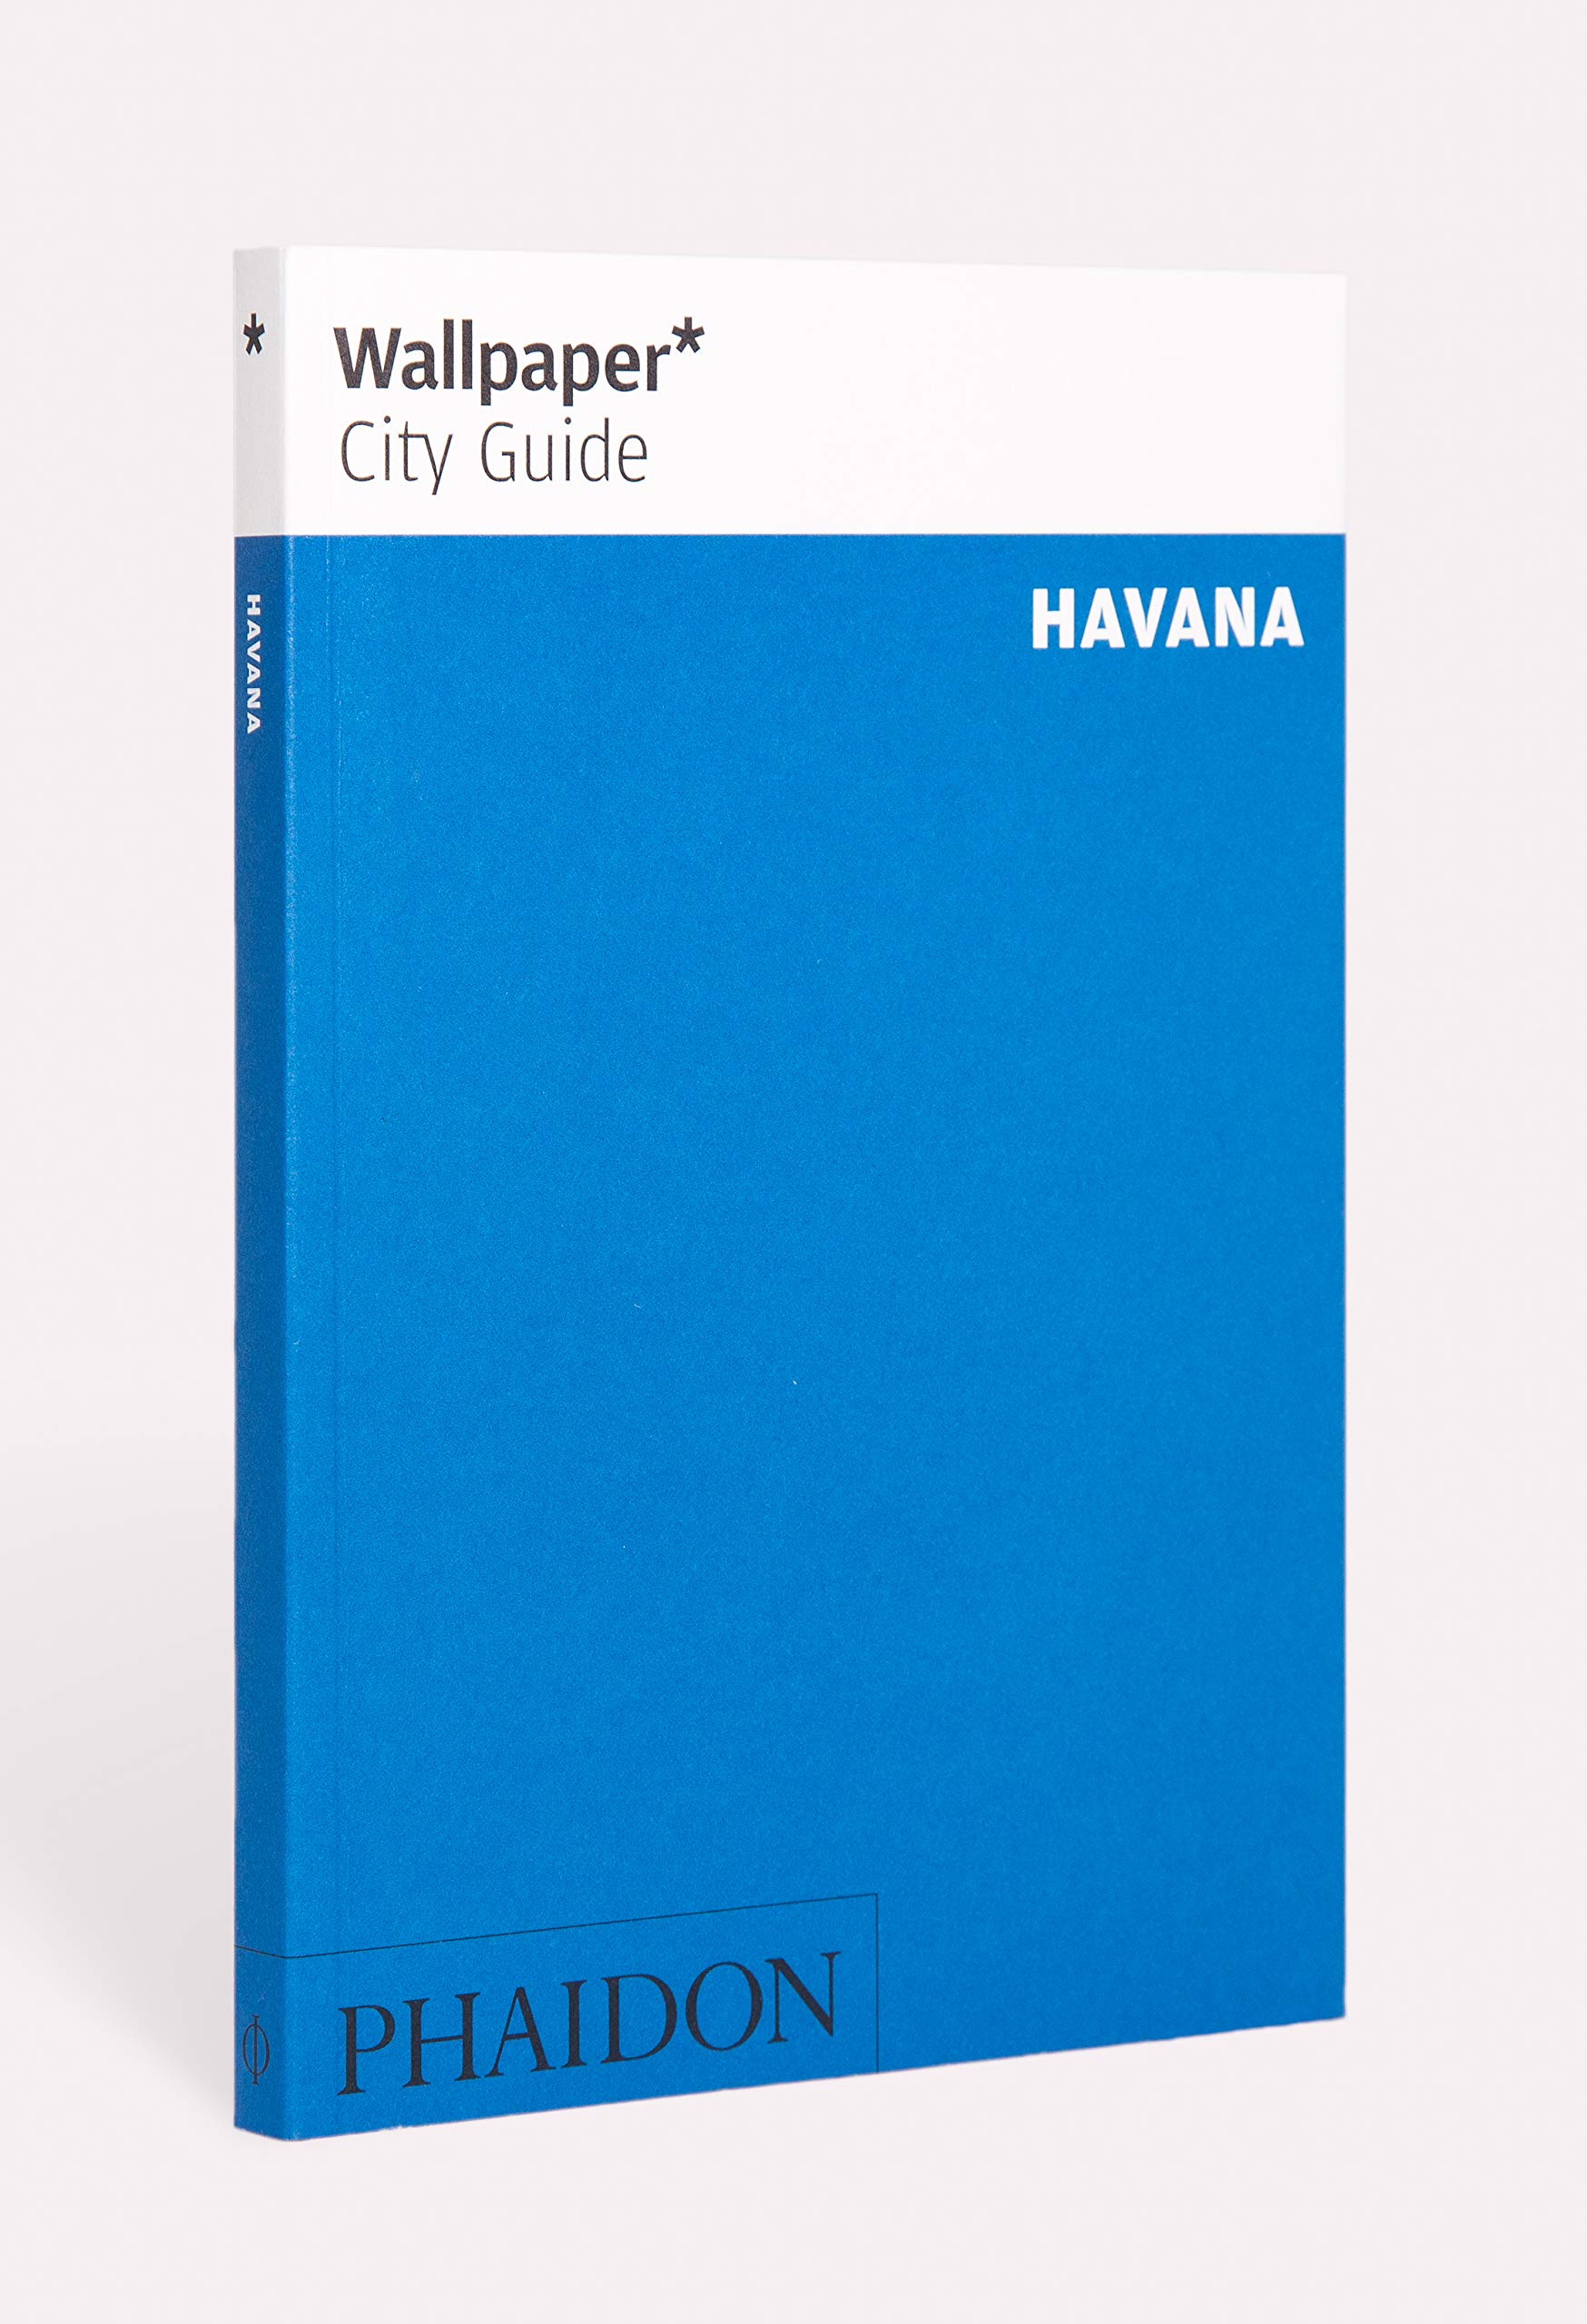 Wallpaper City Guide - Havana